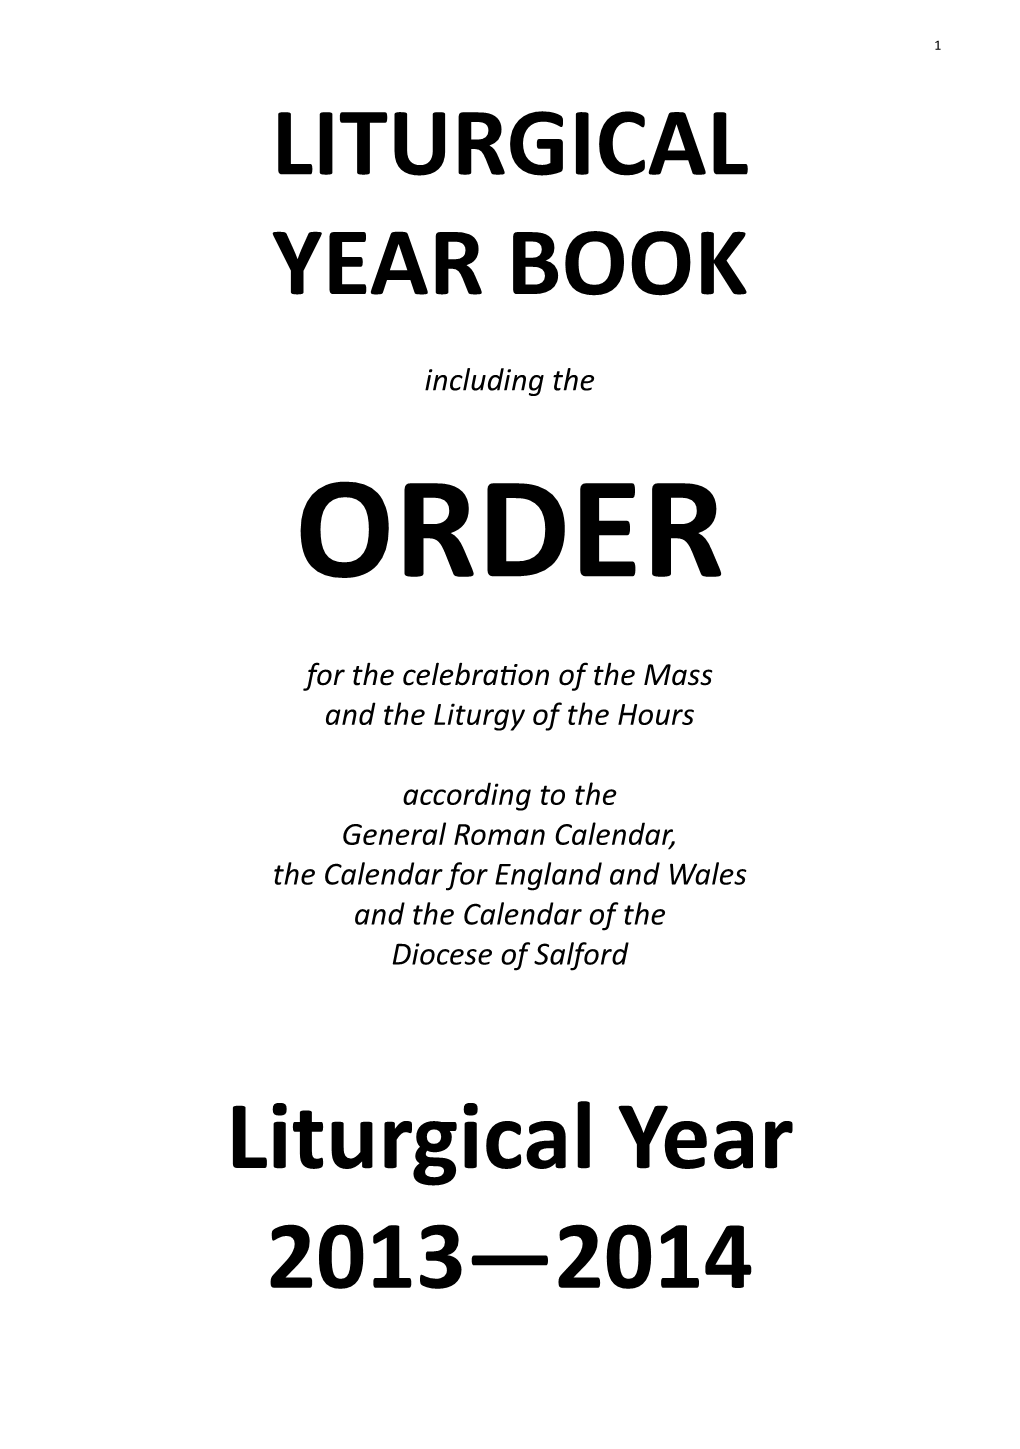 LITURGICAL YEAR BOOK Liturgical Year 2013—2014